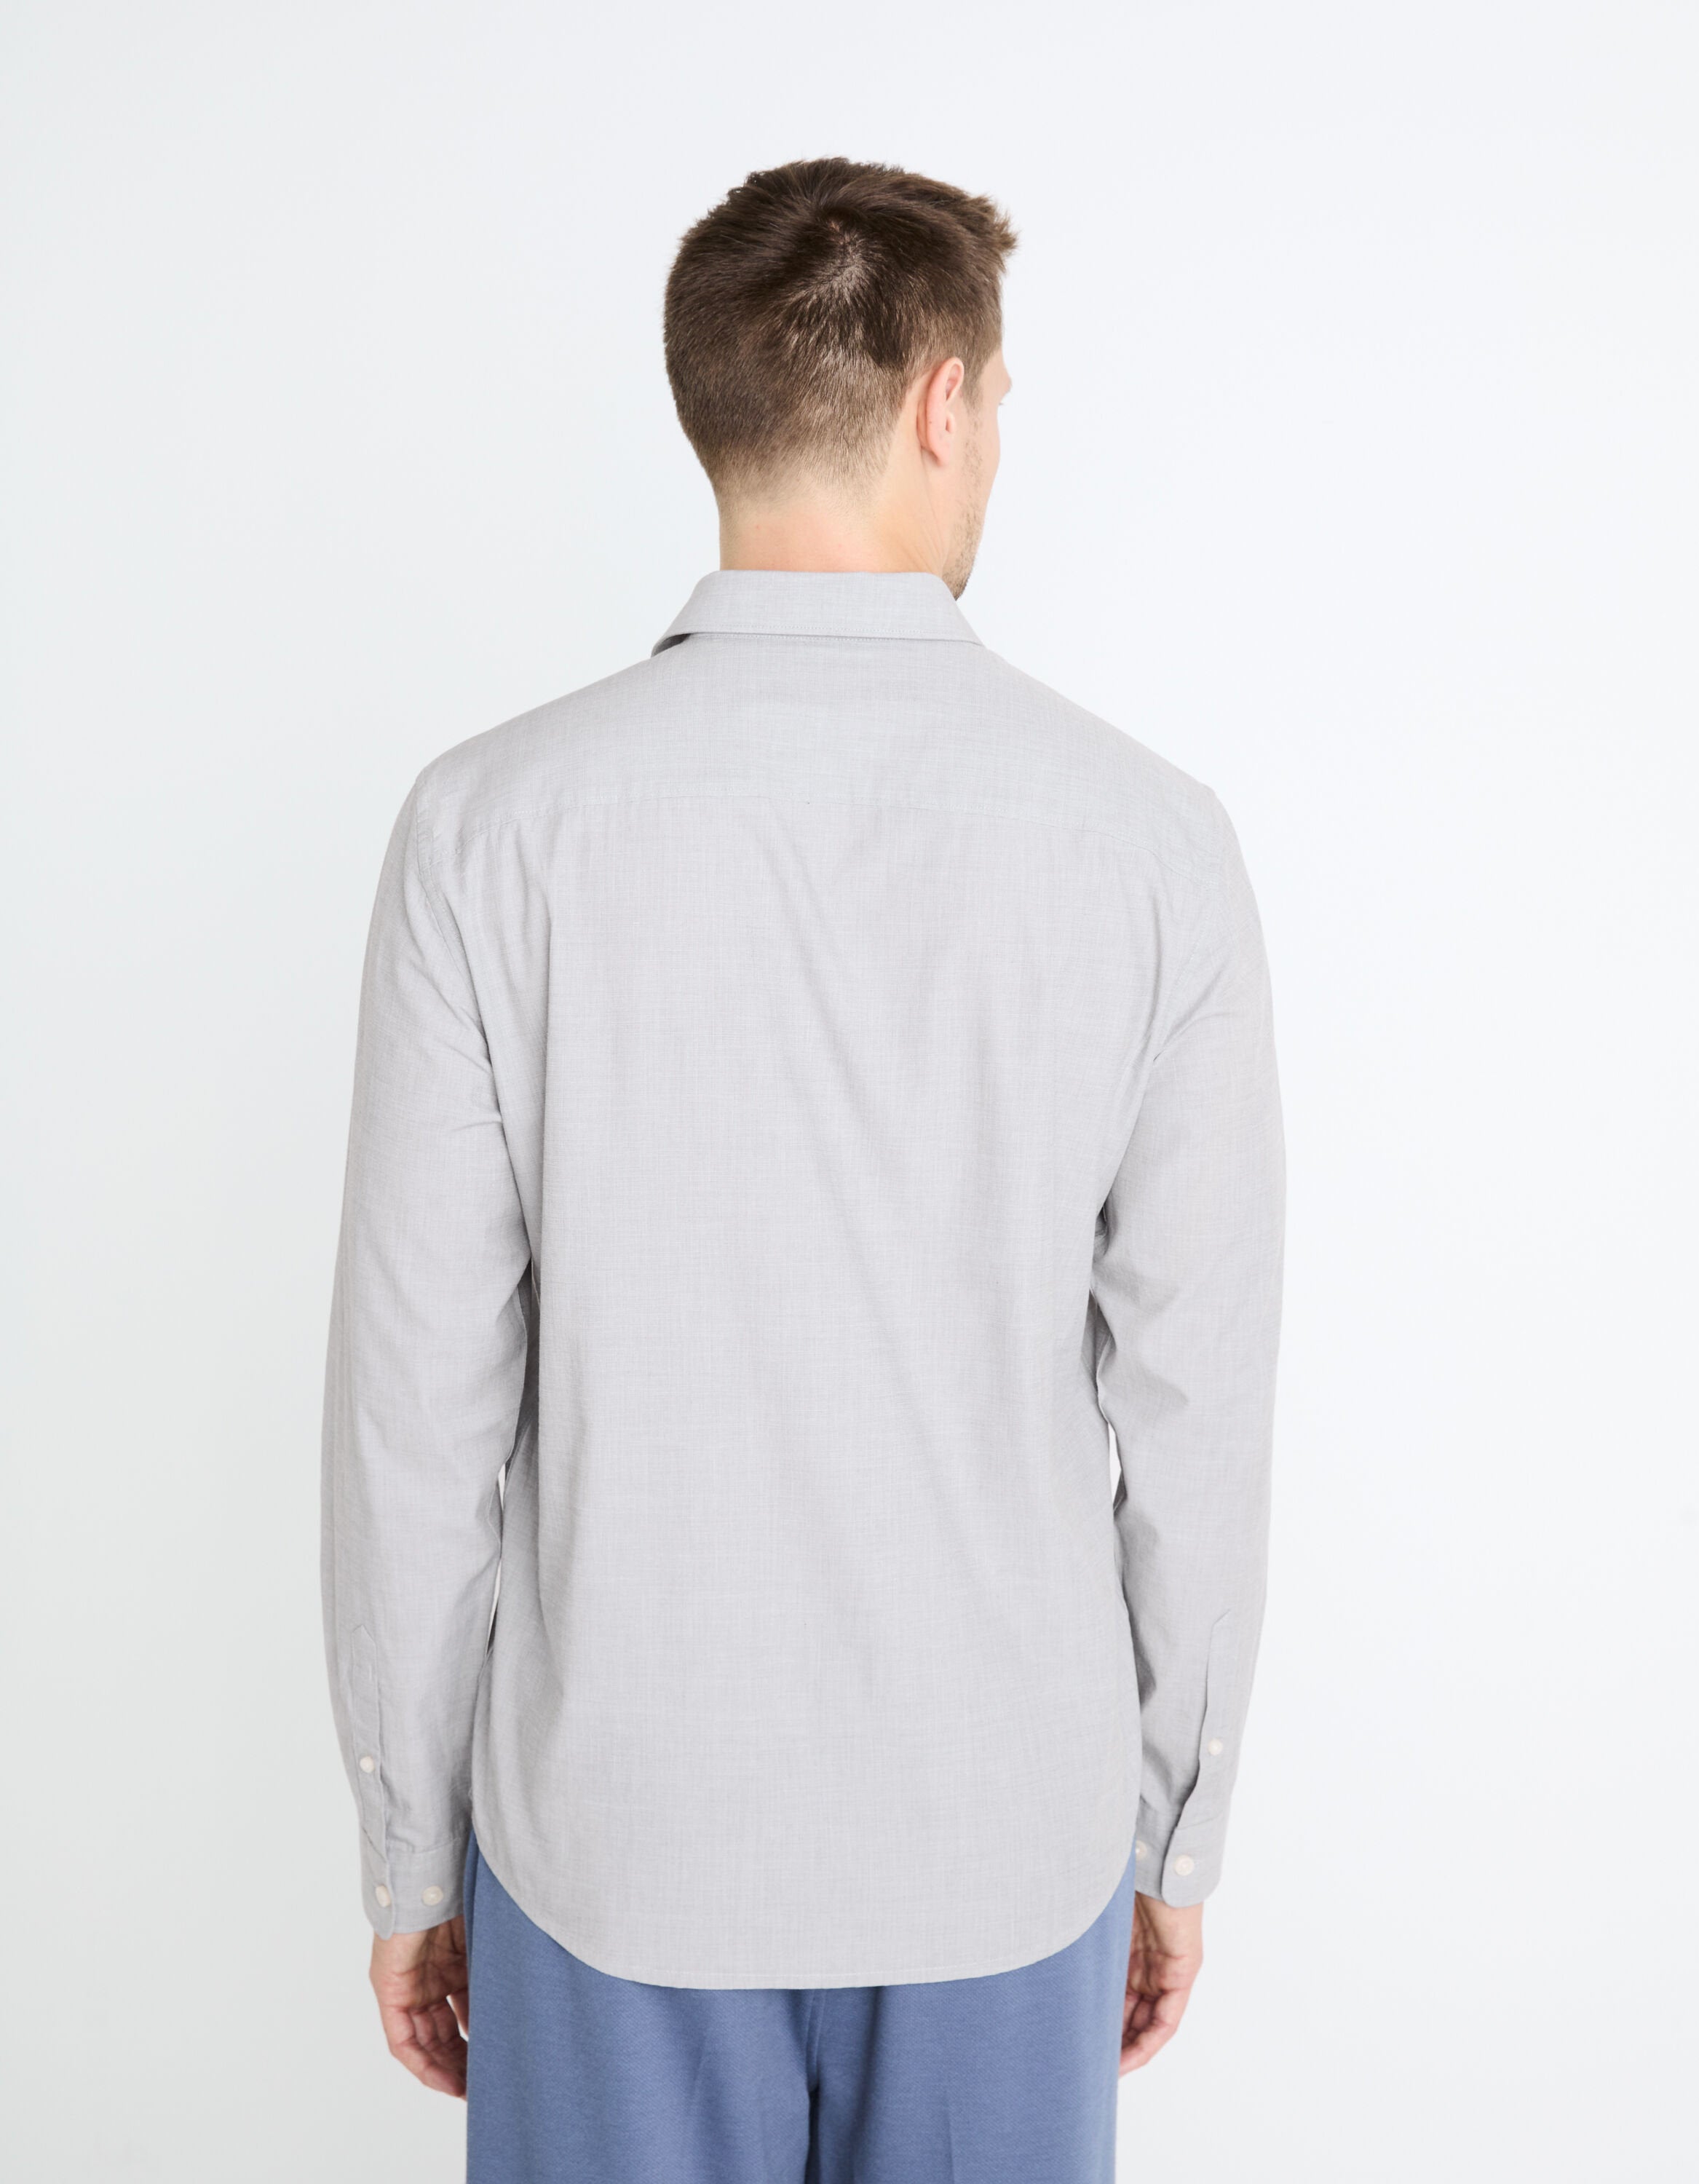 Regular Shirt 100% Cotton - Mottled Grey_FAFILE_ANTHRA GRAY_04